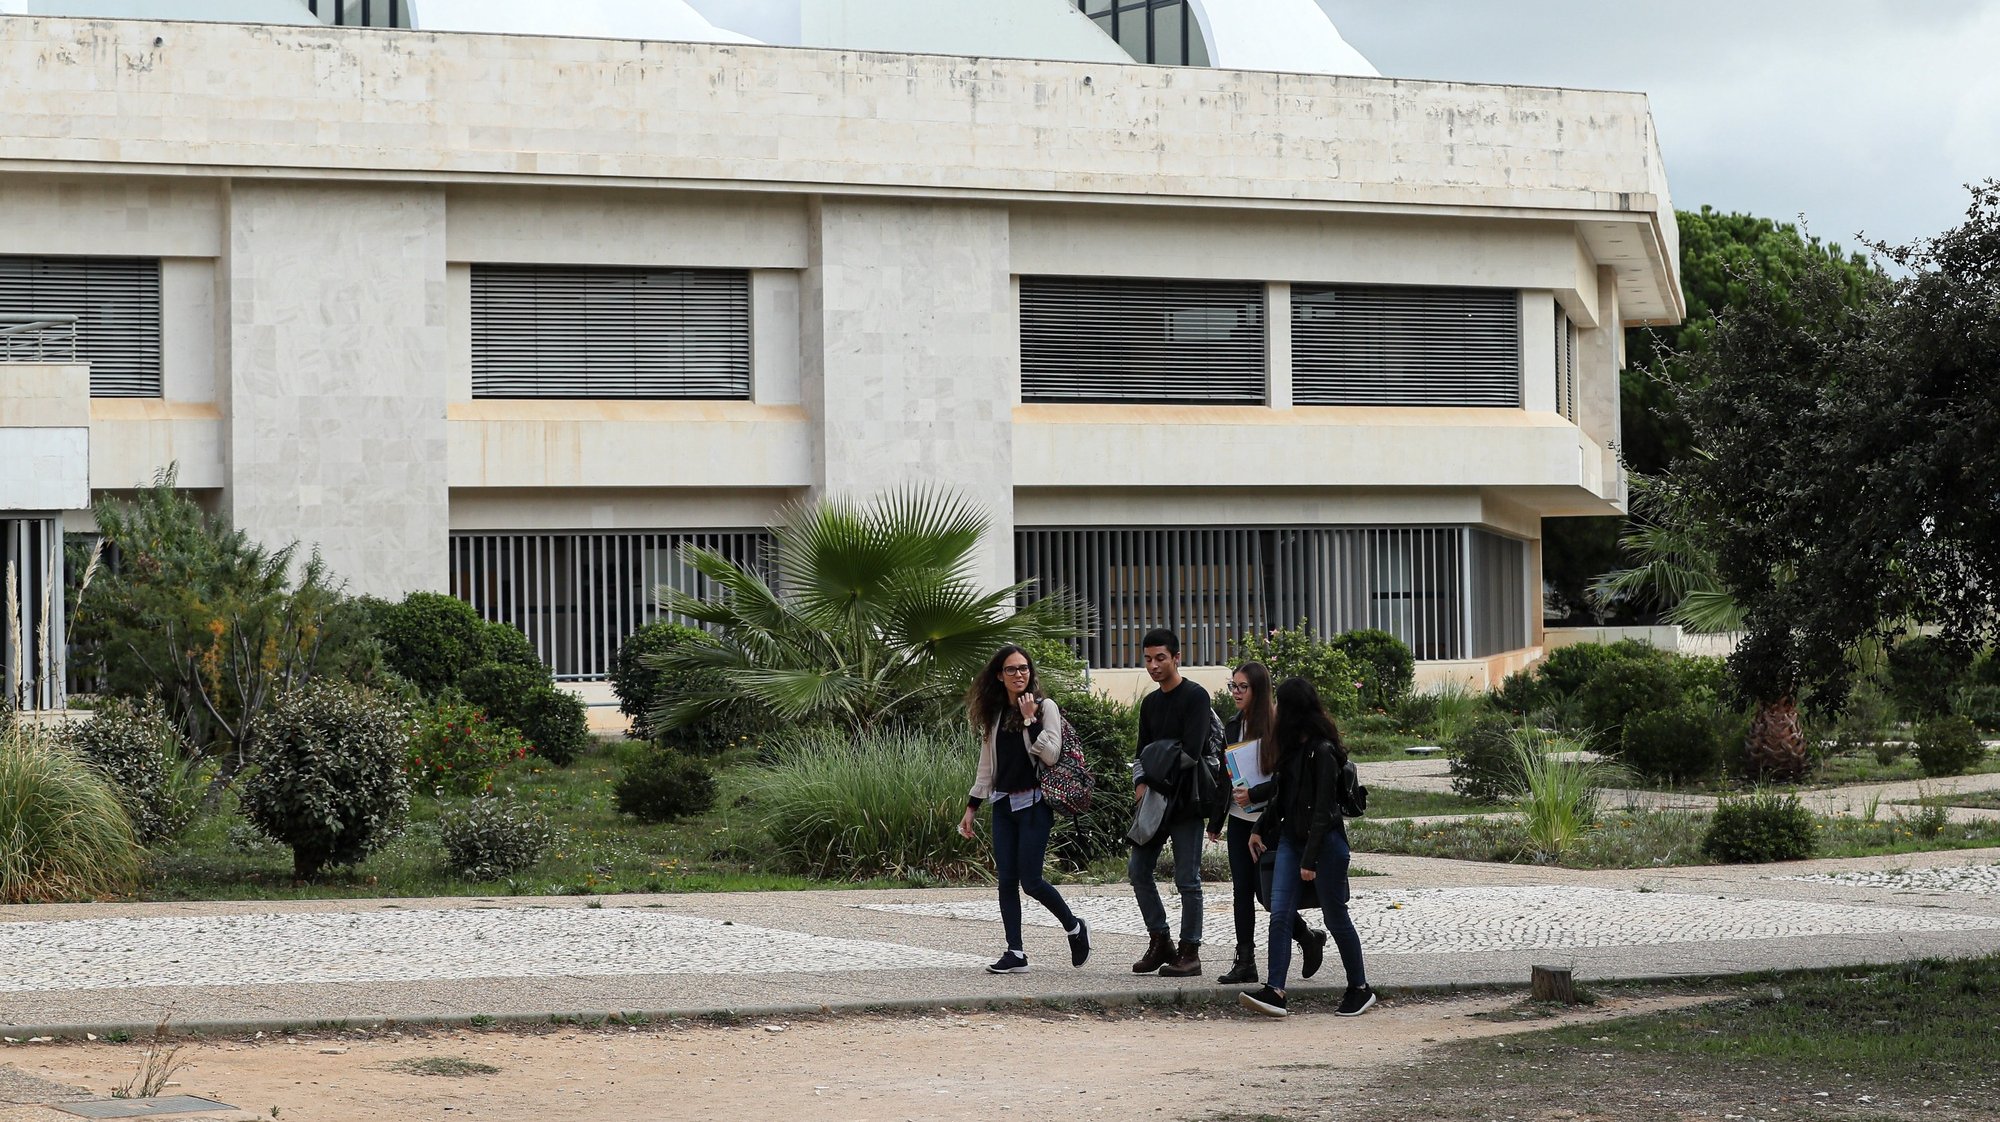 Alunos estrangeiros escolhem a universidade do Algarve para fazer cursos completos,11 de novembro de 2019. (ACOMPANHA TEXTO DE 25 DE NOVEMBRO DE 2019). LUÍS FORRA/LUSA